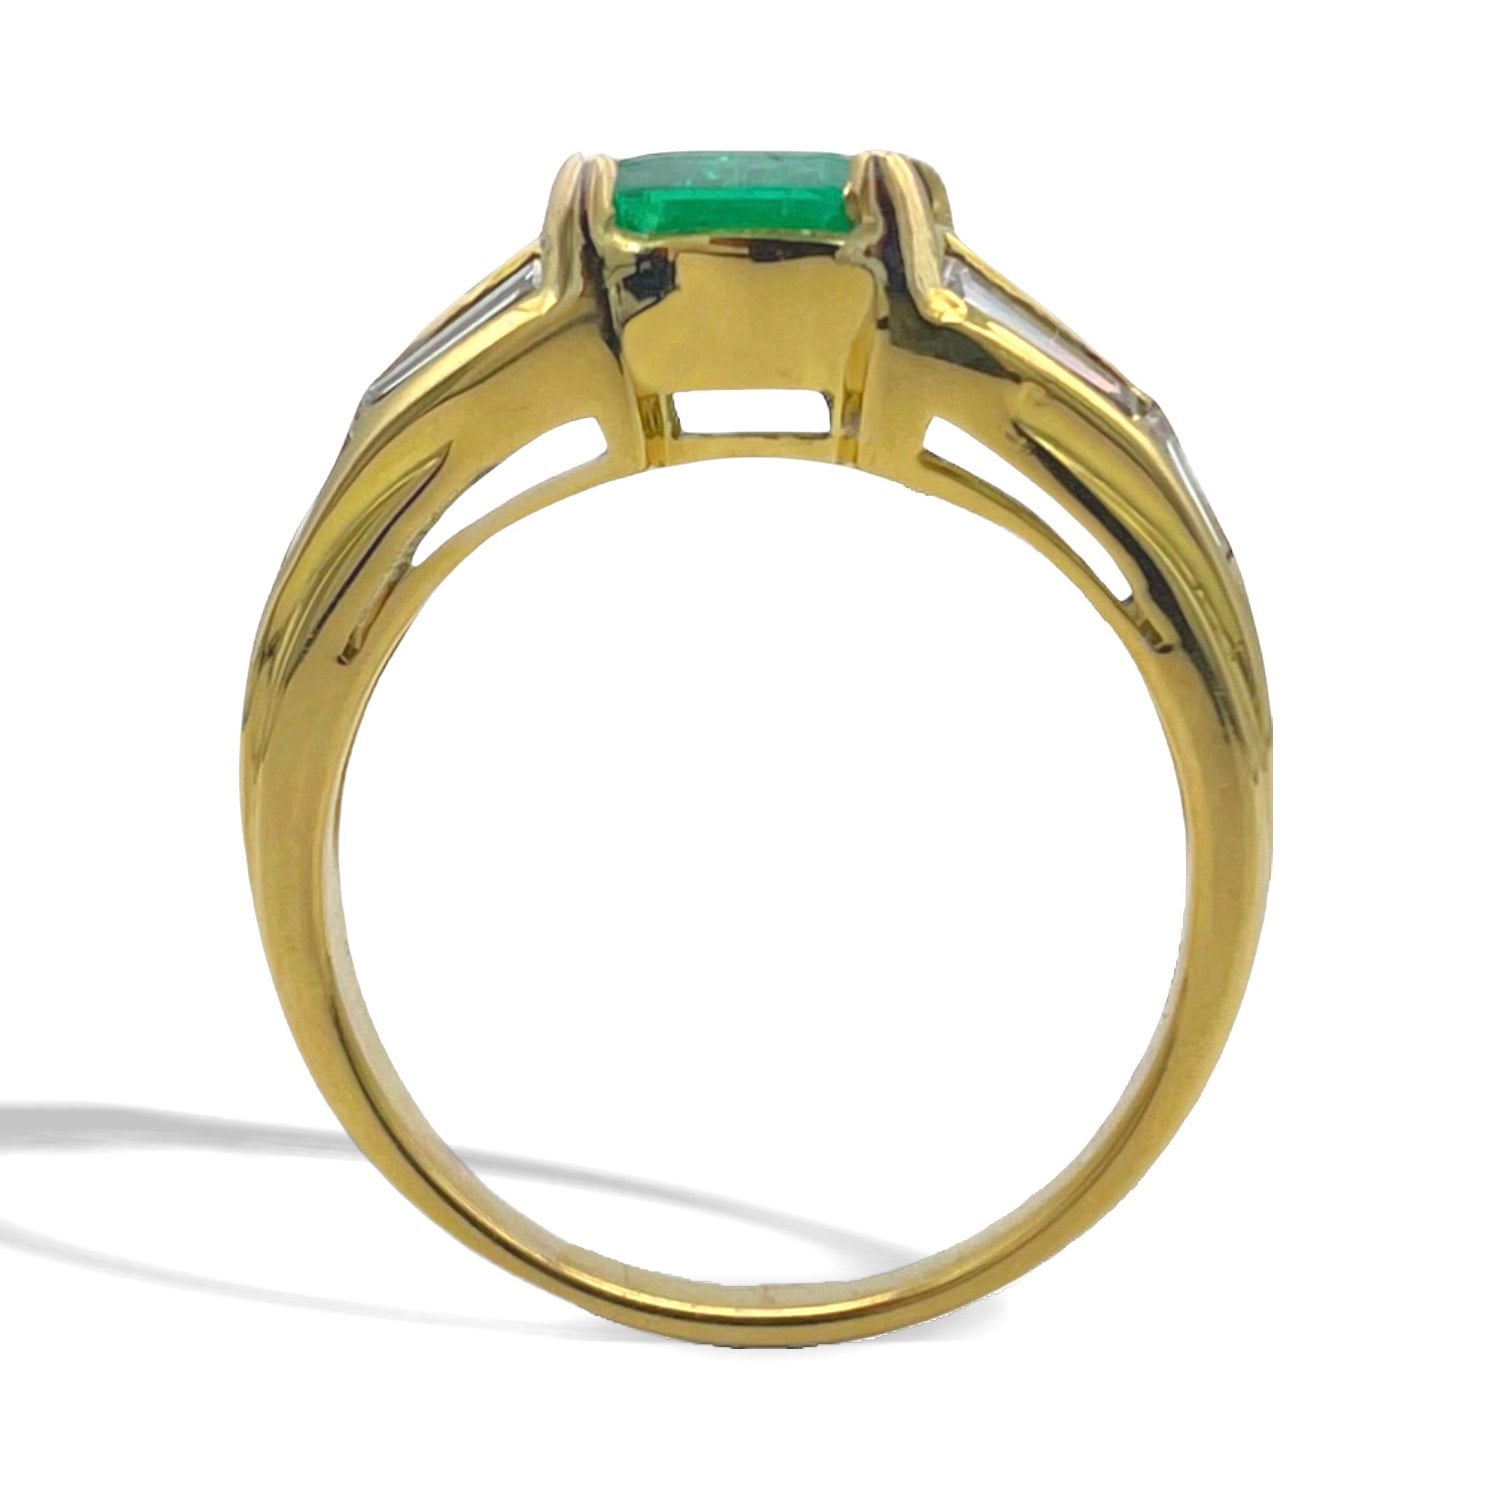 Tajmahal Gems World - Brazilian Emerald (Panna) Stone Panchadhatu Ring  Price 71,000 TK in Bangladesh ($) Product Price:  https://tajmahalgemsworld.com/shop/finger-ring-design/brazilian-emerald- panna-stone-panchadhatu-ring-price-71000-tk-in-bangladesh ...